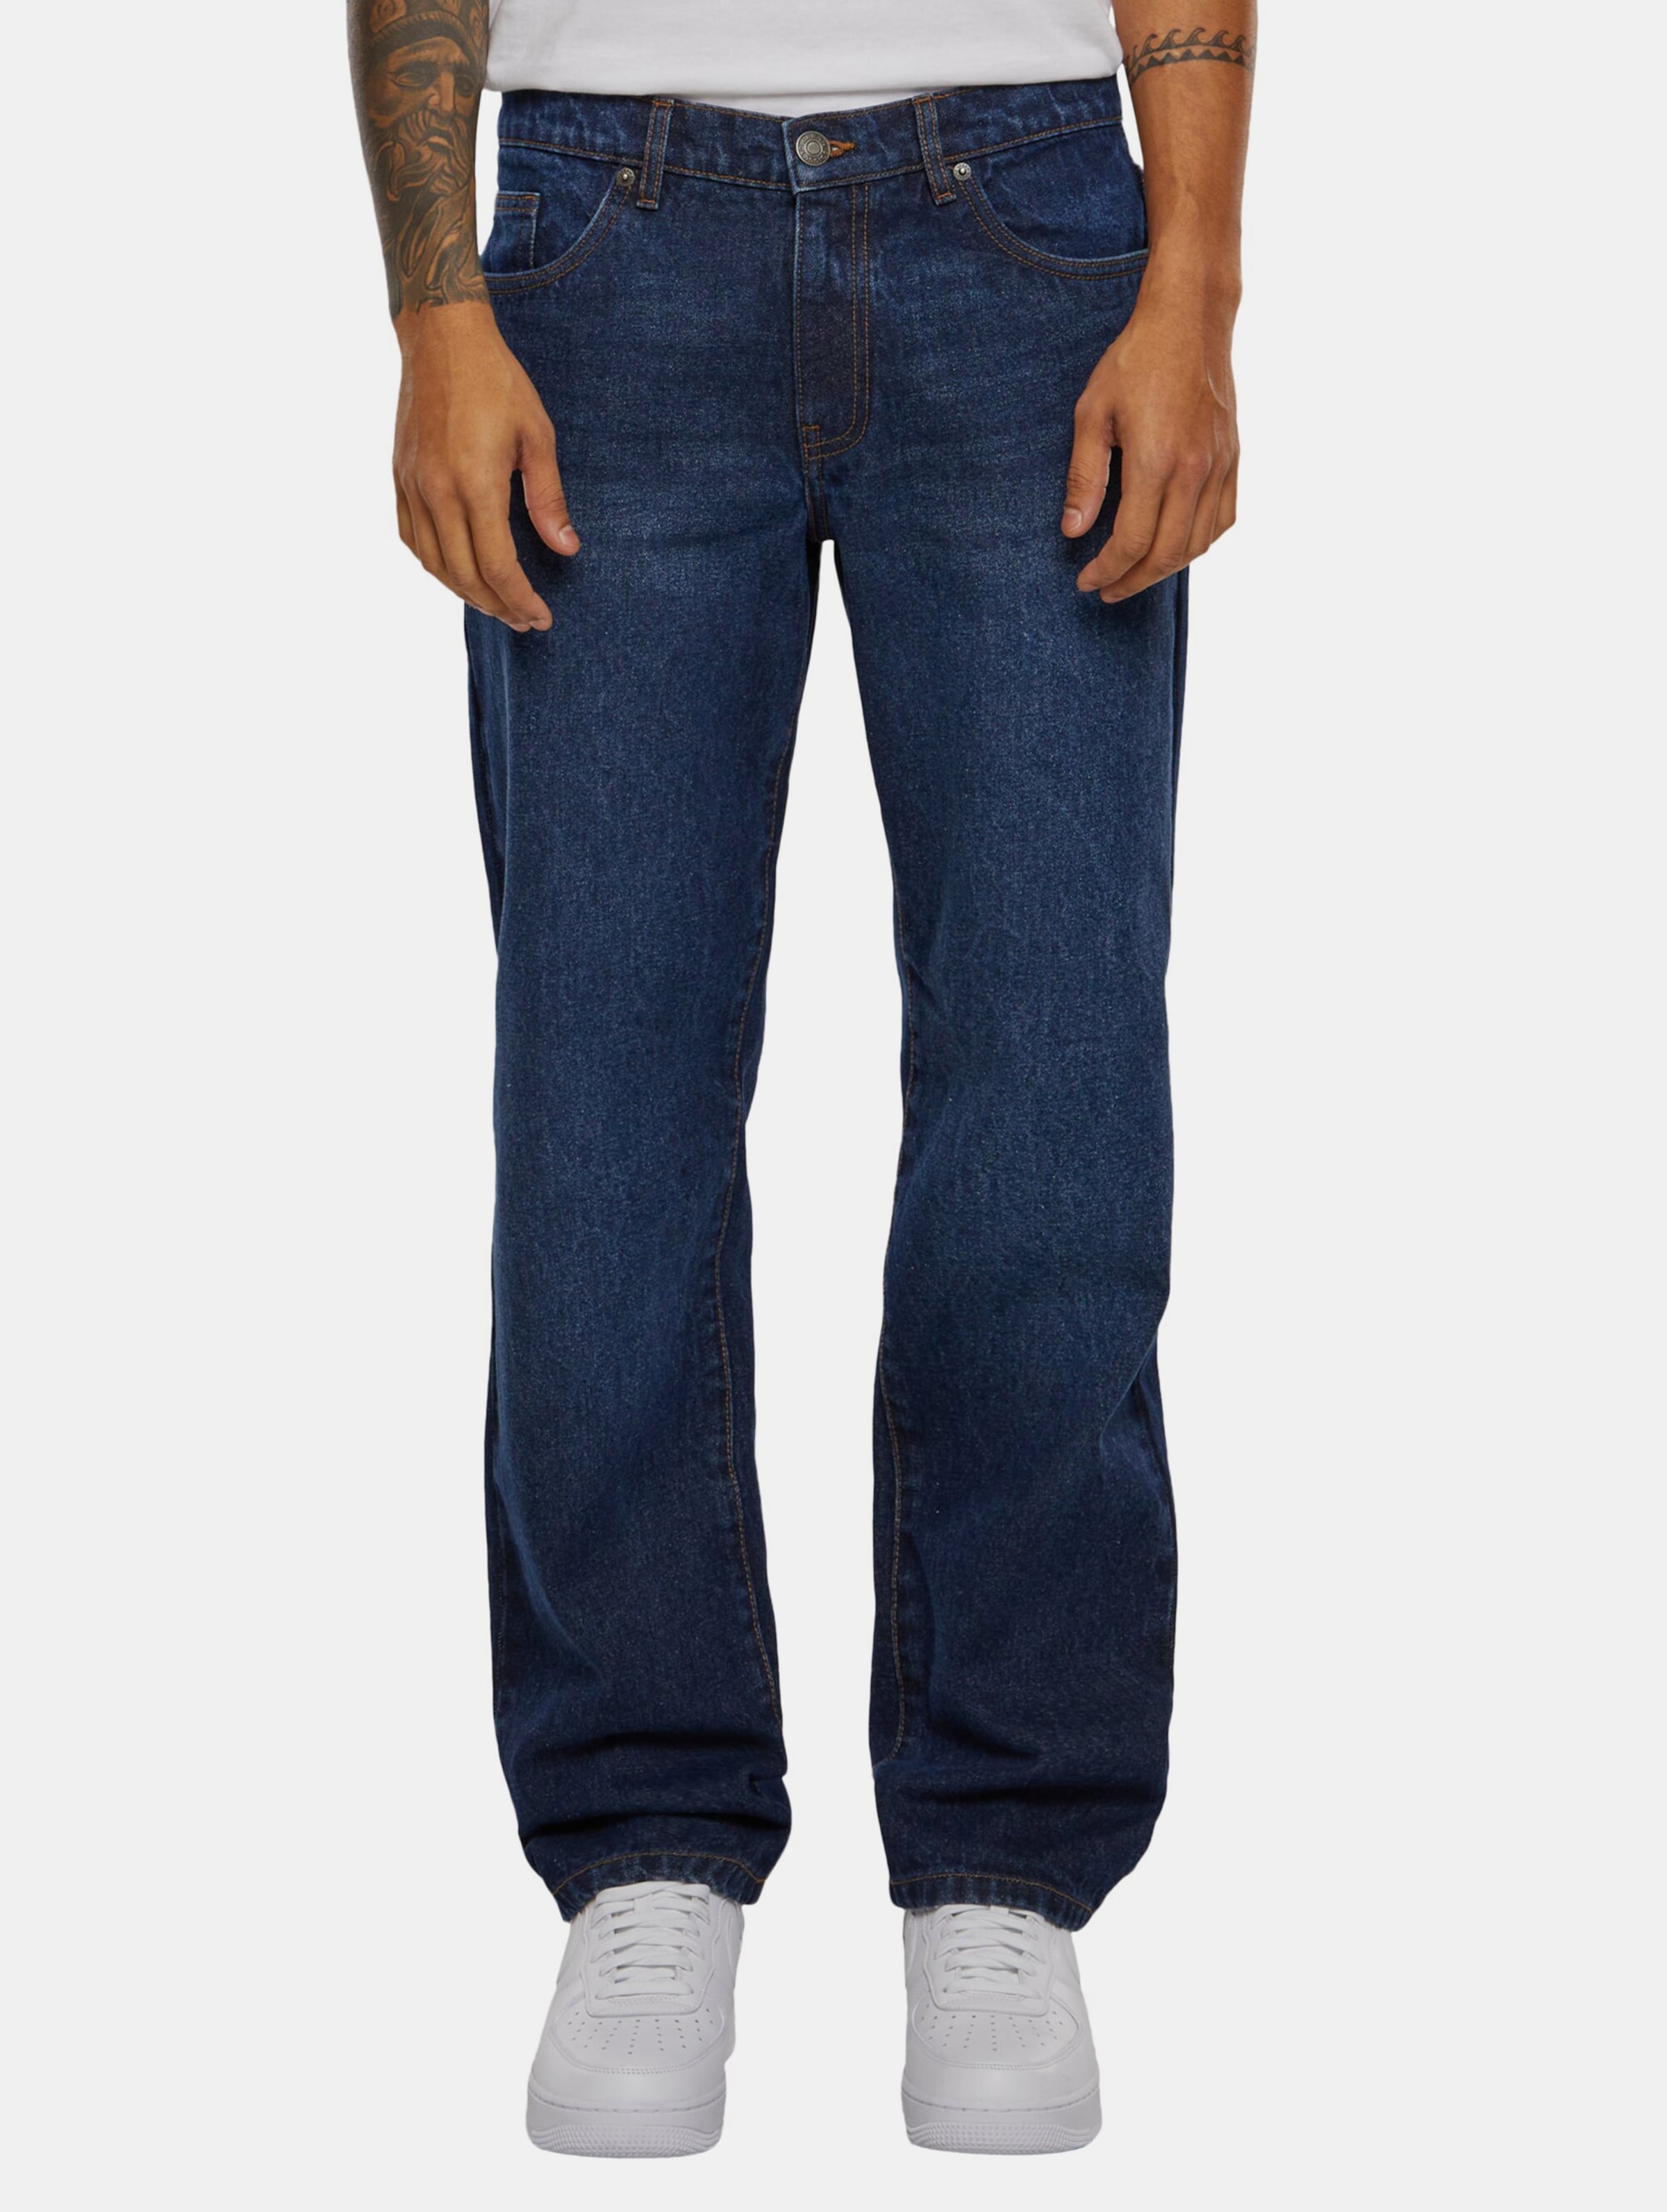 Urban Classics - Heavy Ounce Jeans Broek rechte pijpen - Taille, 31 inch - Blauw